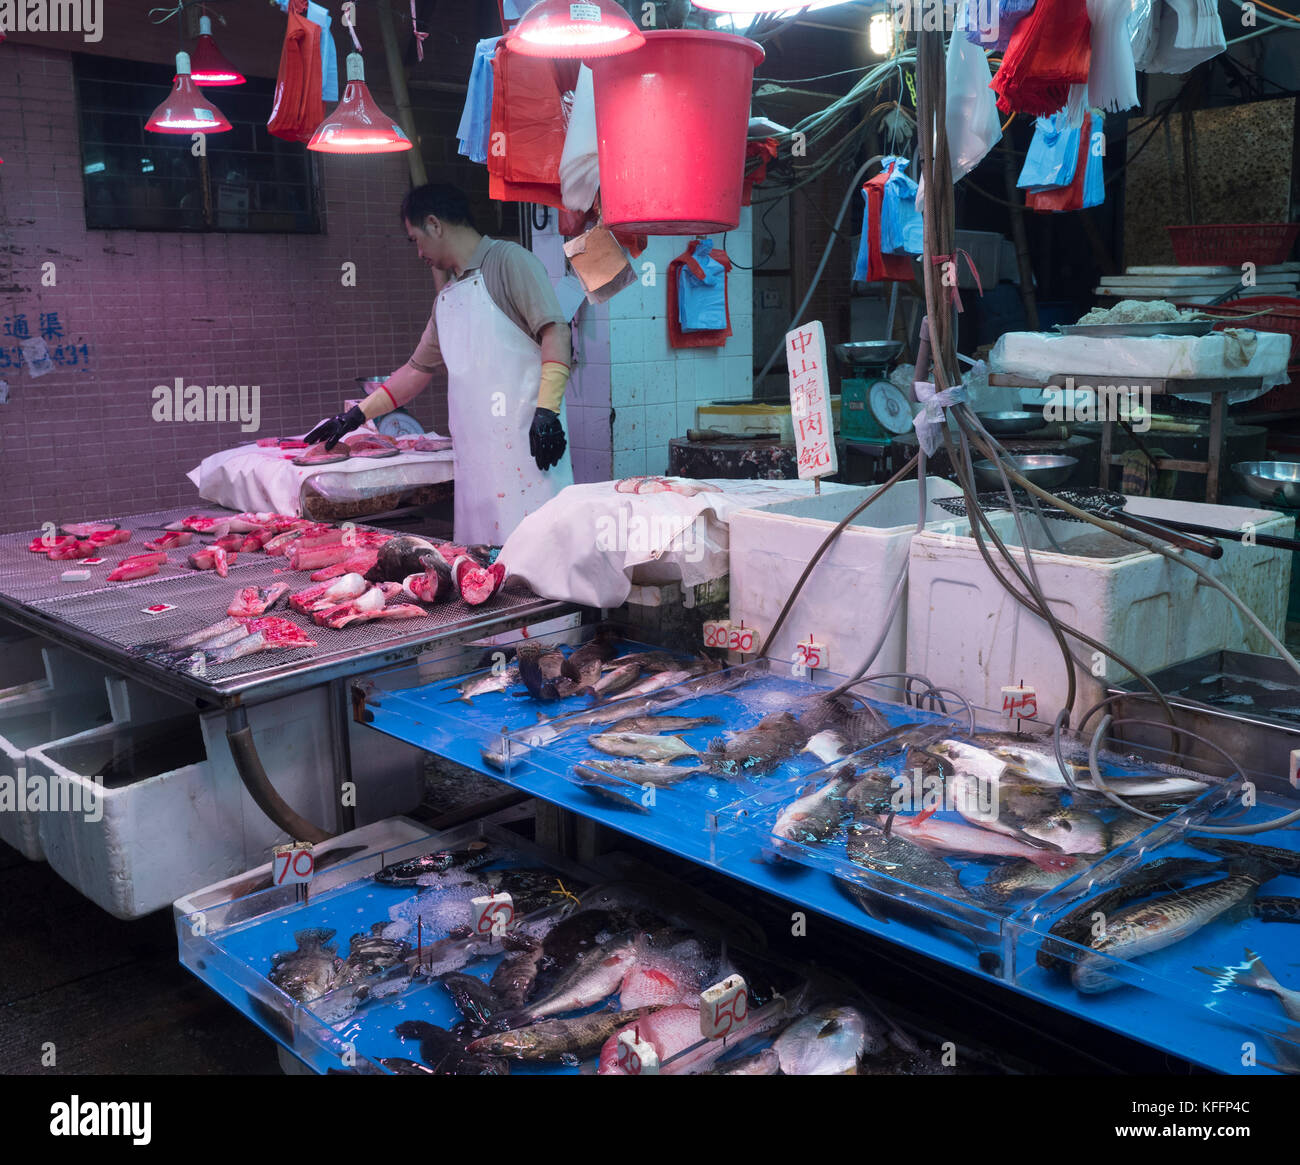 Los vendedores del mercado en Yau Mercado interior Tei mercado alimentario, Hong Kong, China, Asia. Foto de stock